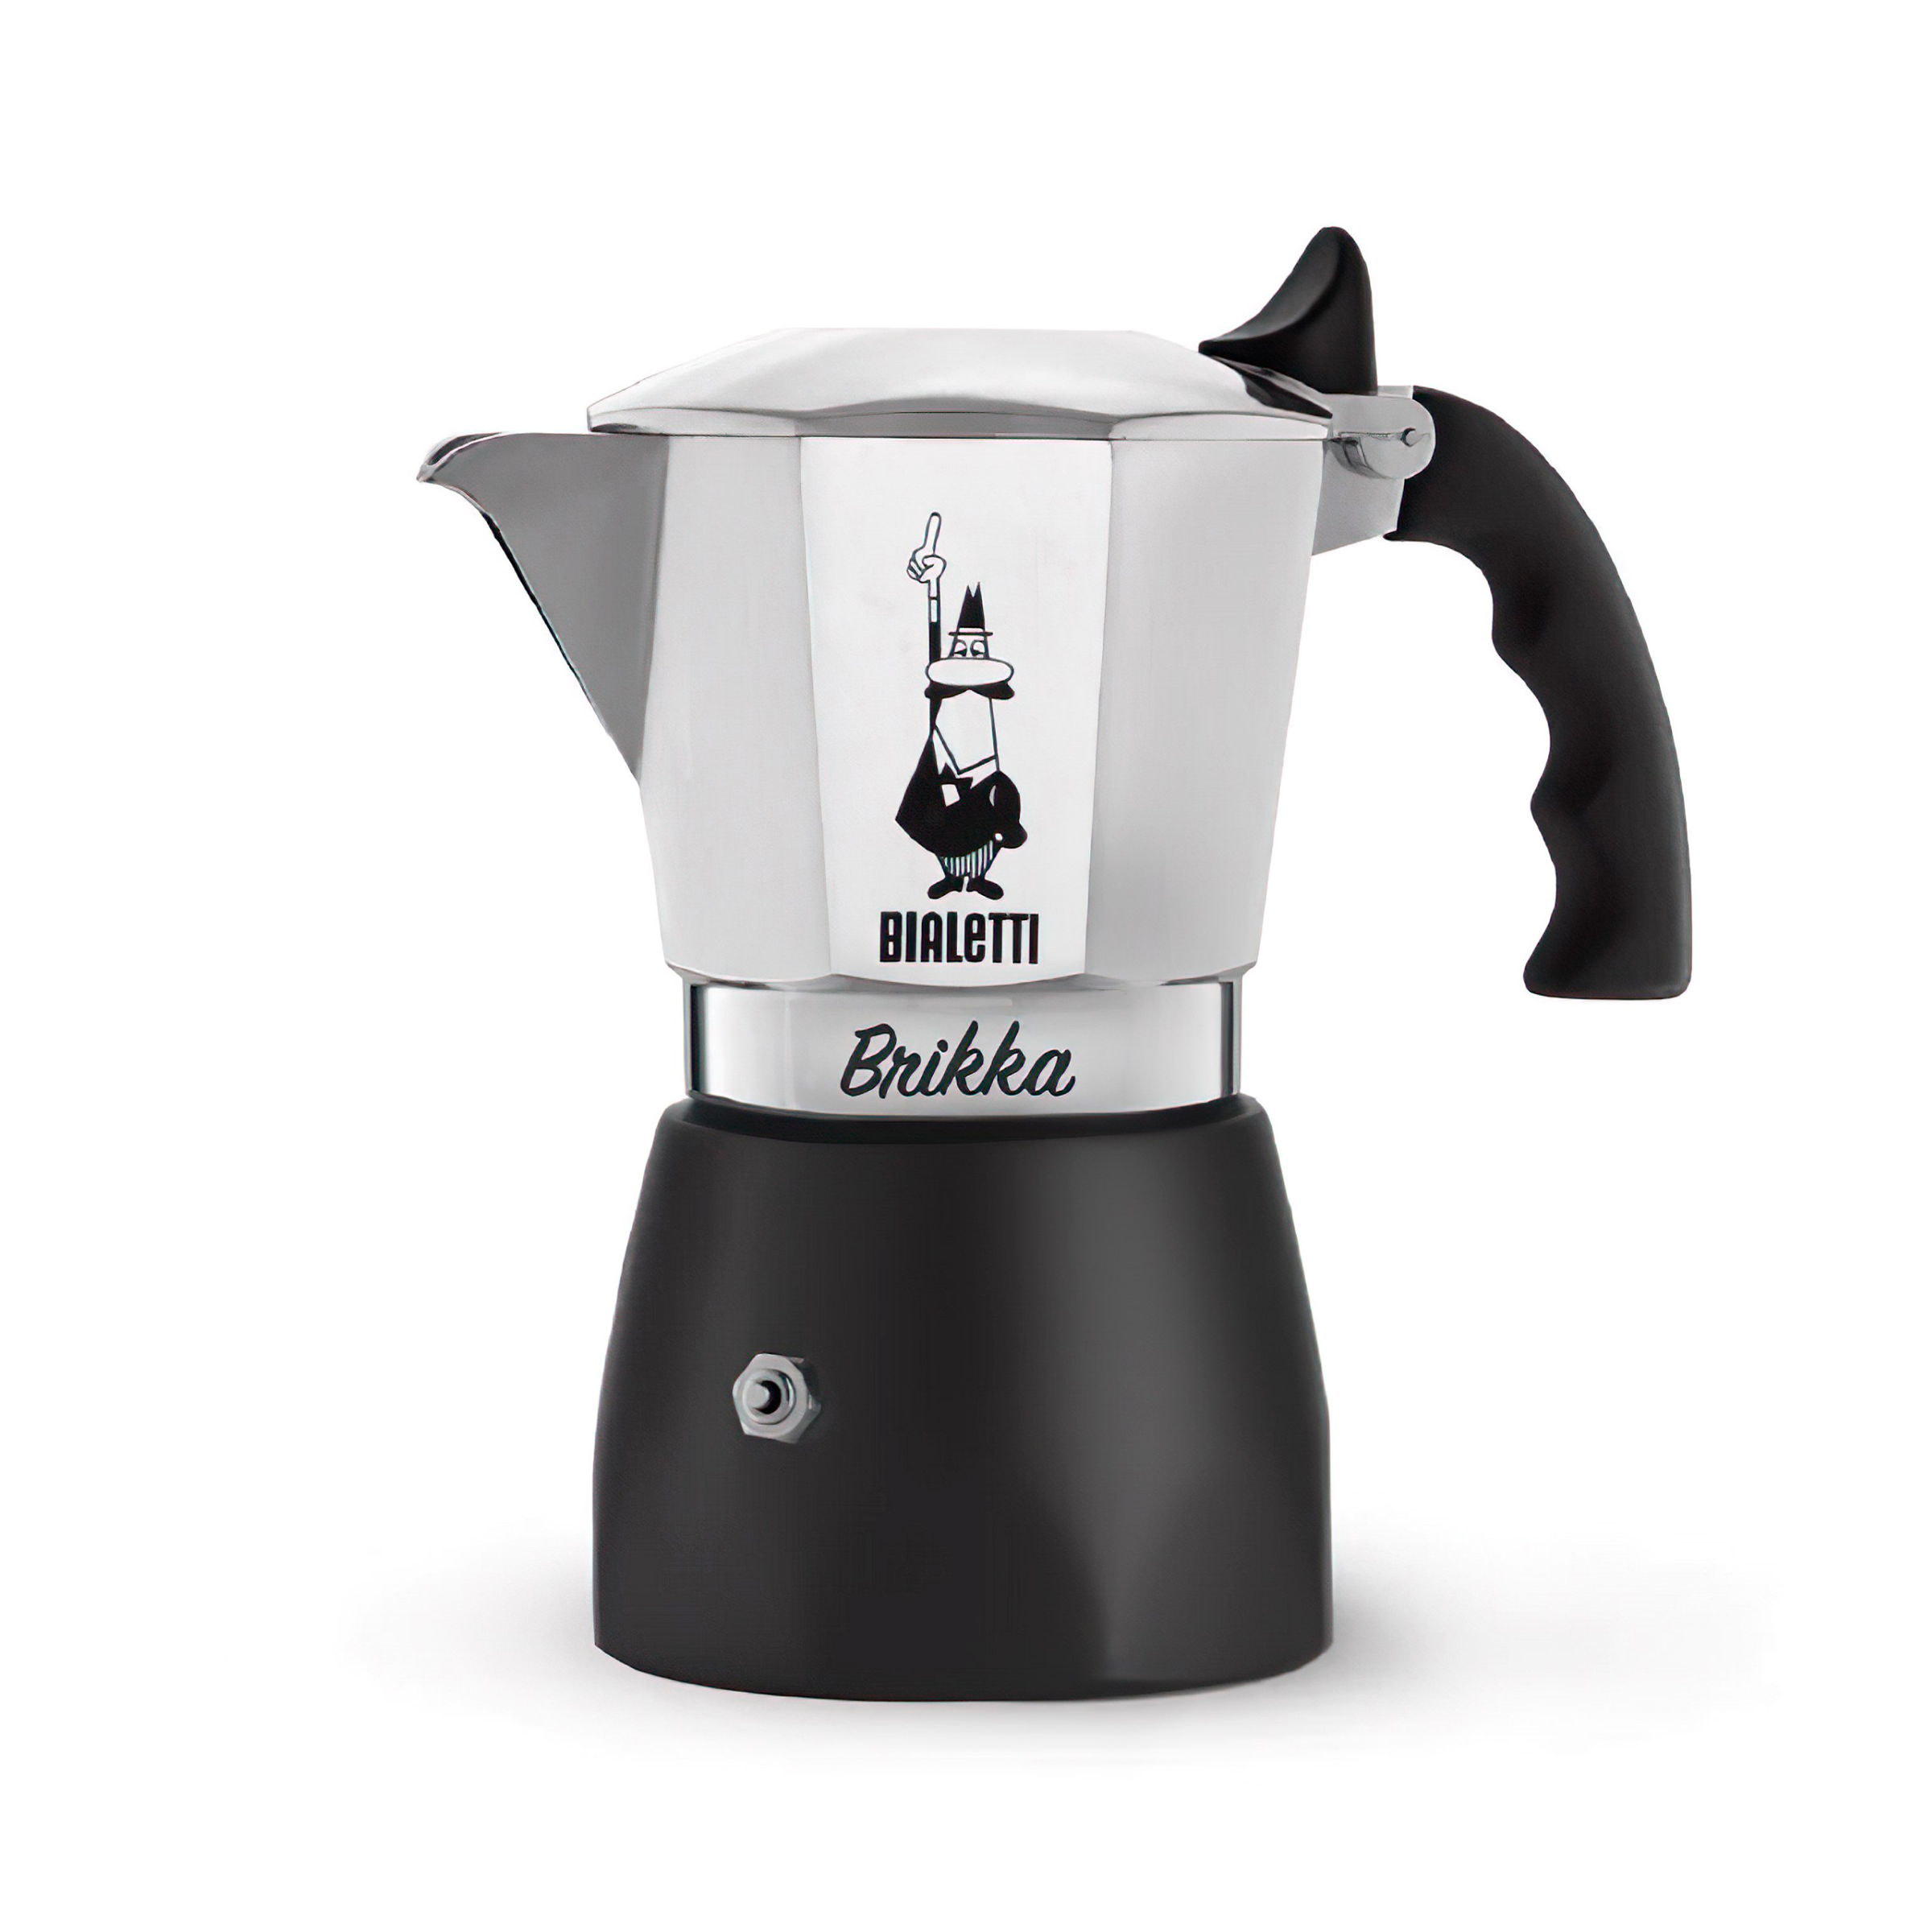 Bialetti Brikka - 2 Espresso Cup